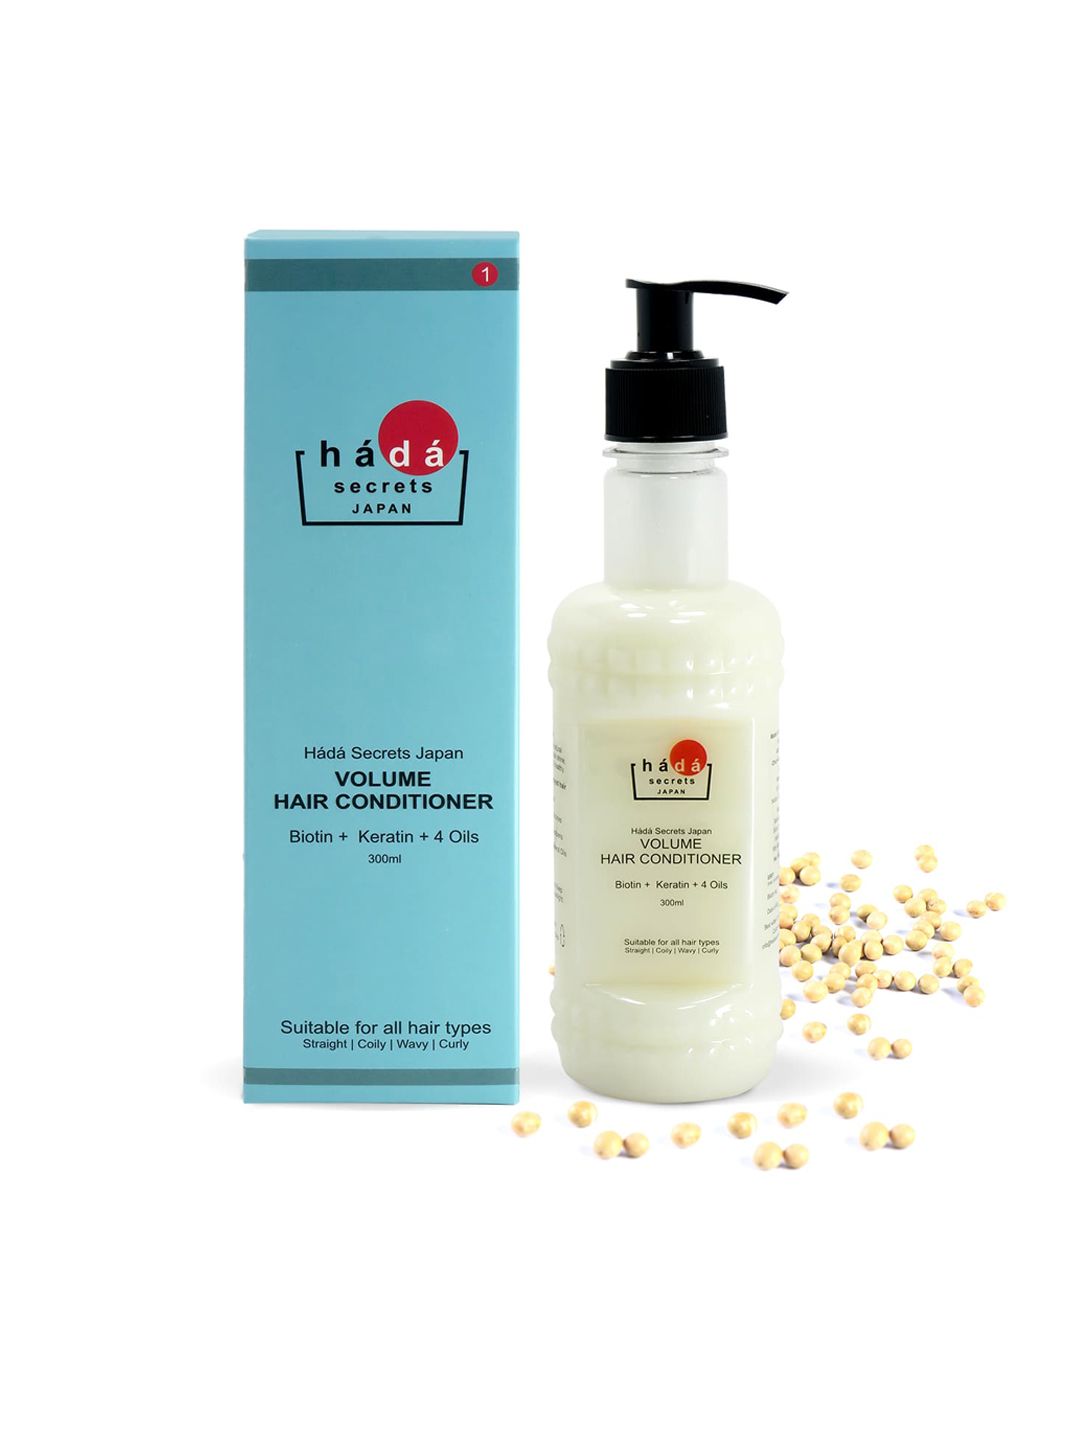 Hada Secrets Japan Volume Hair Conditioner with Biotin, Keratin & 4 Oils 300 ml Price in India